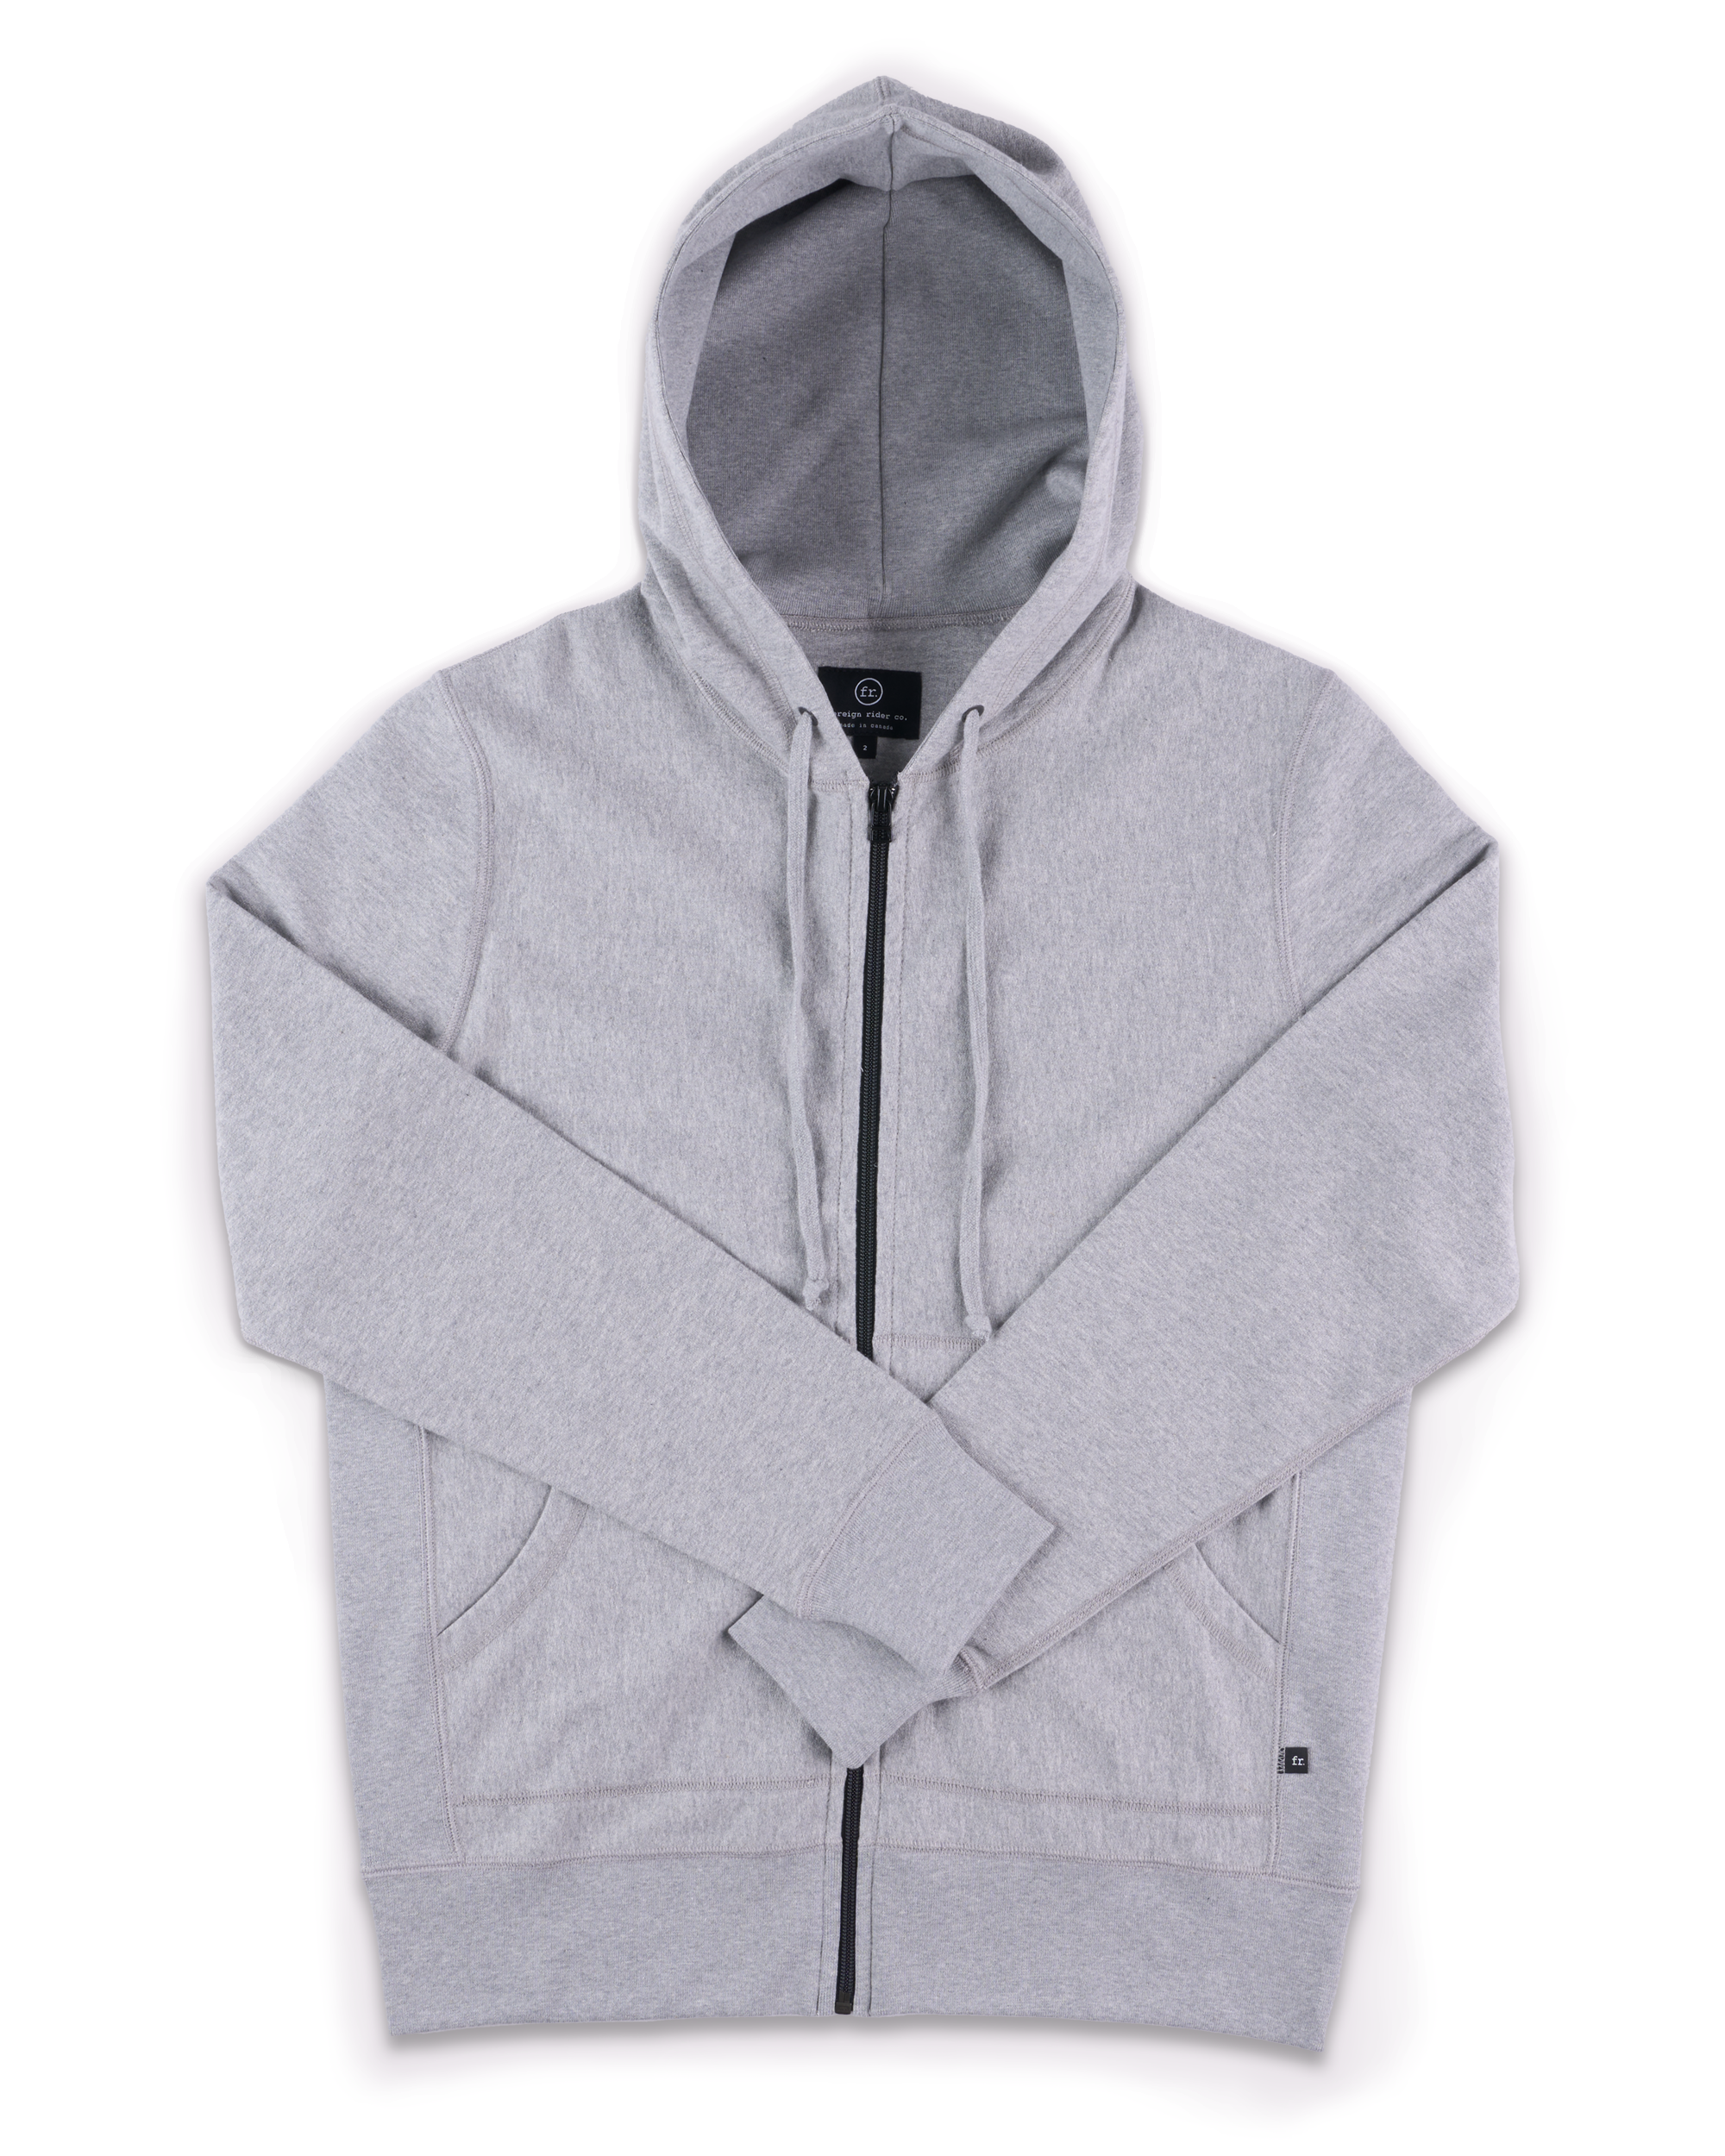 Full Zip Hooded Sweatshirt Grey - Foreign Rider Co.